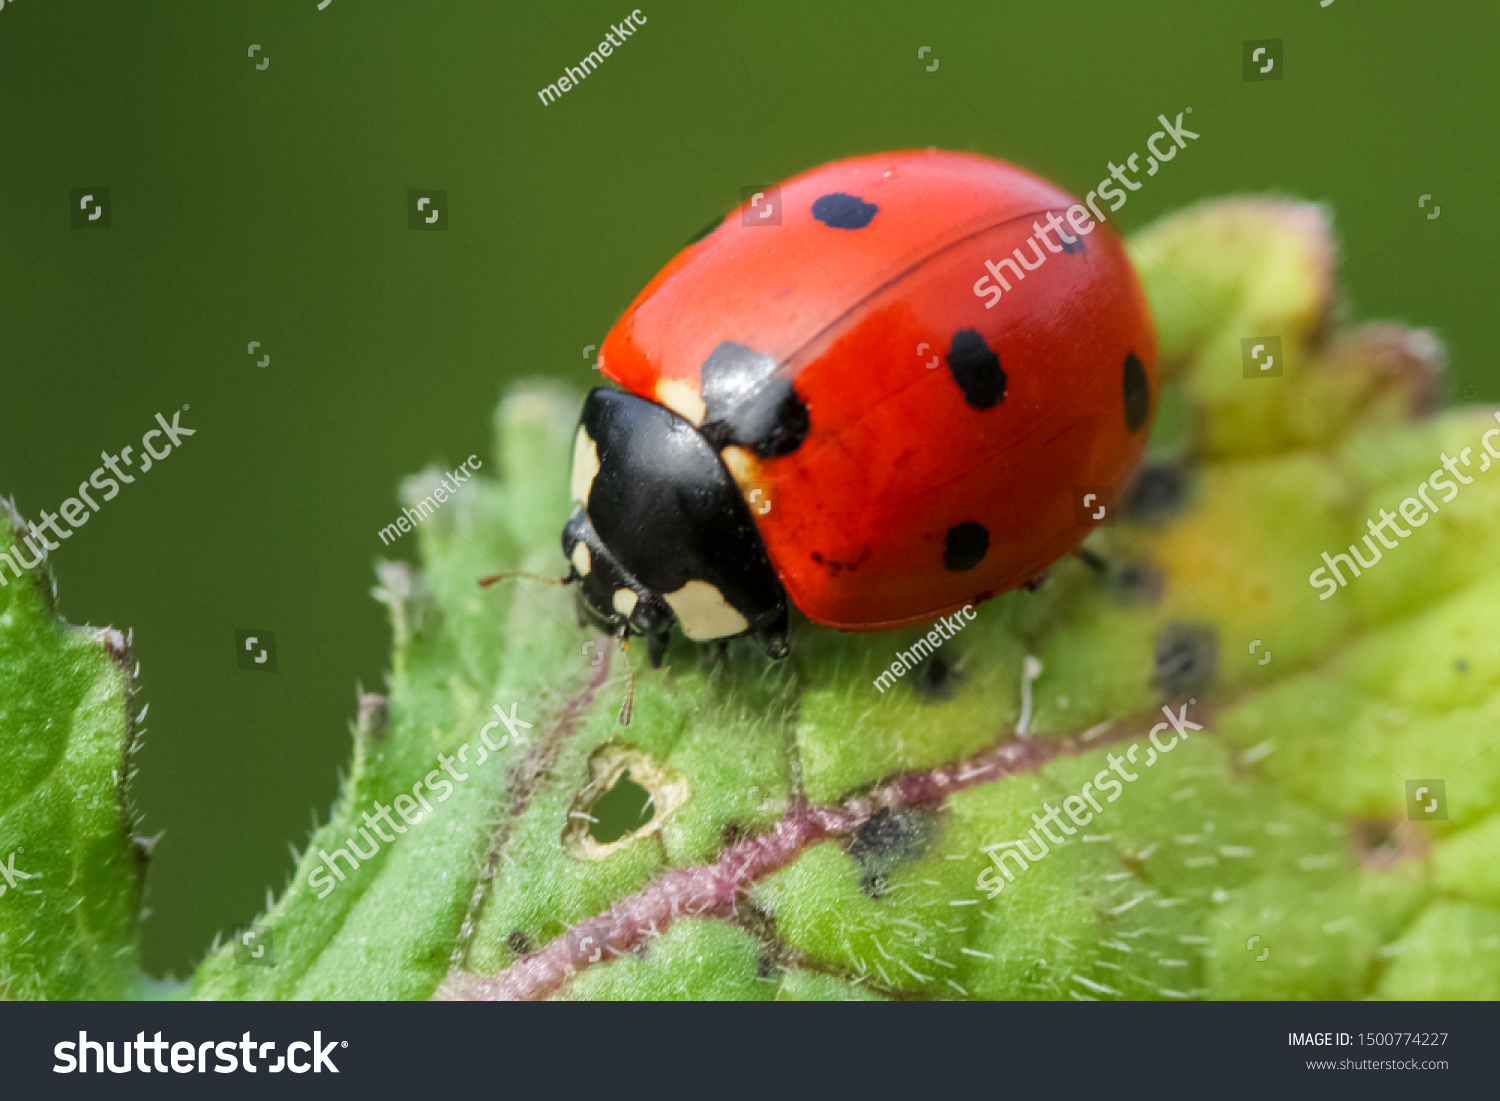 Ladybug on grass macro close up #1500774227